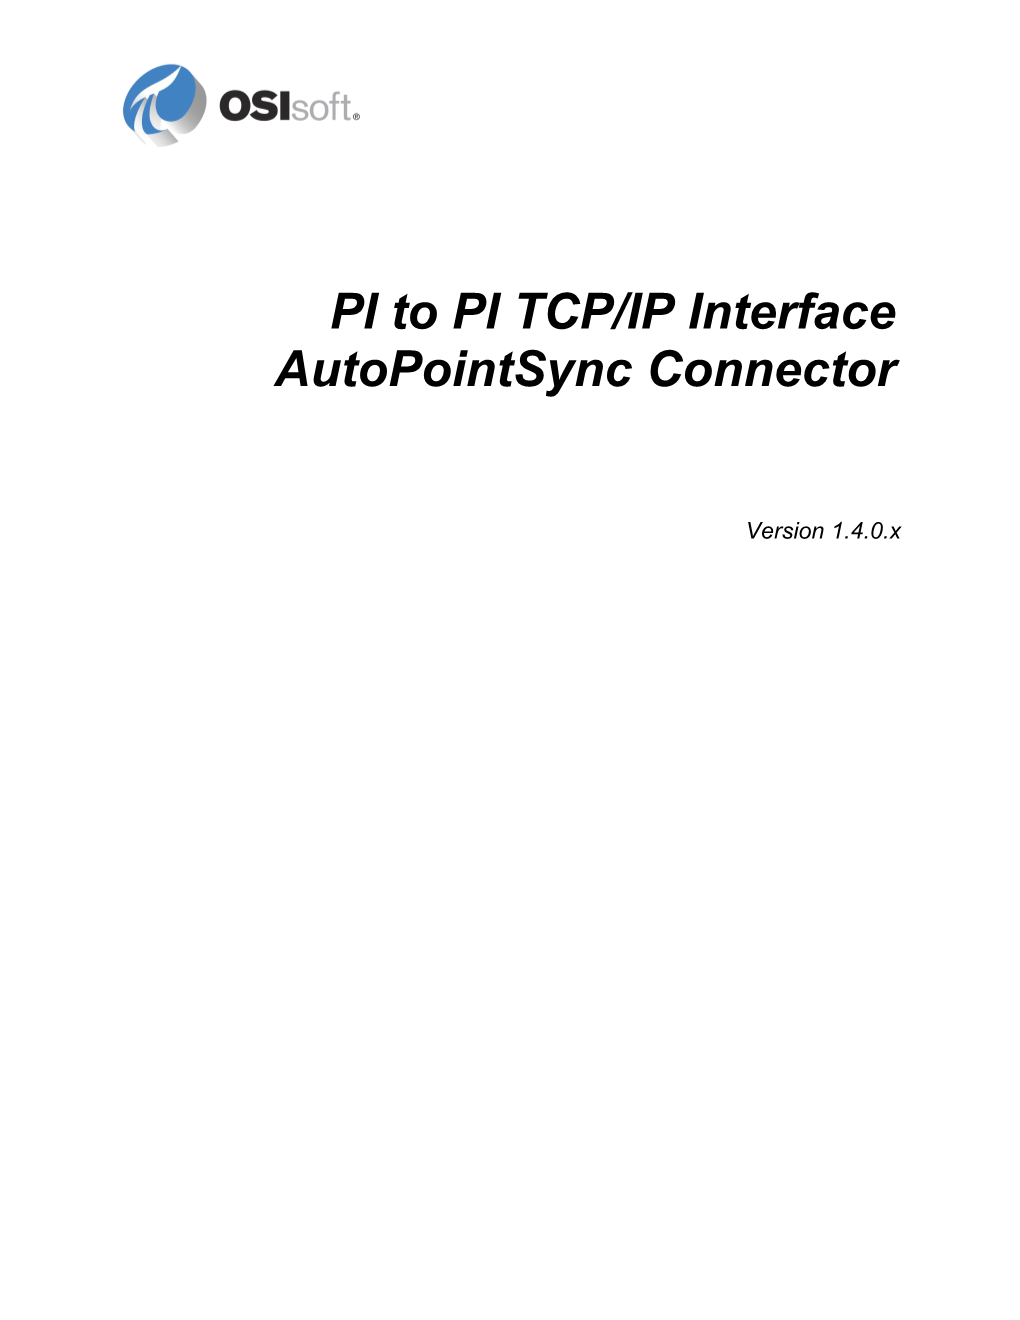 PI to PI TCP/IP Interface Autopointsync Connector